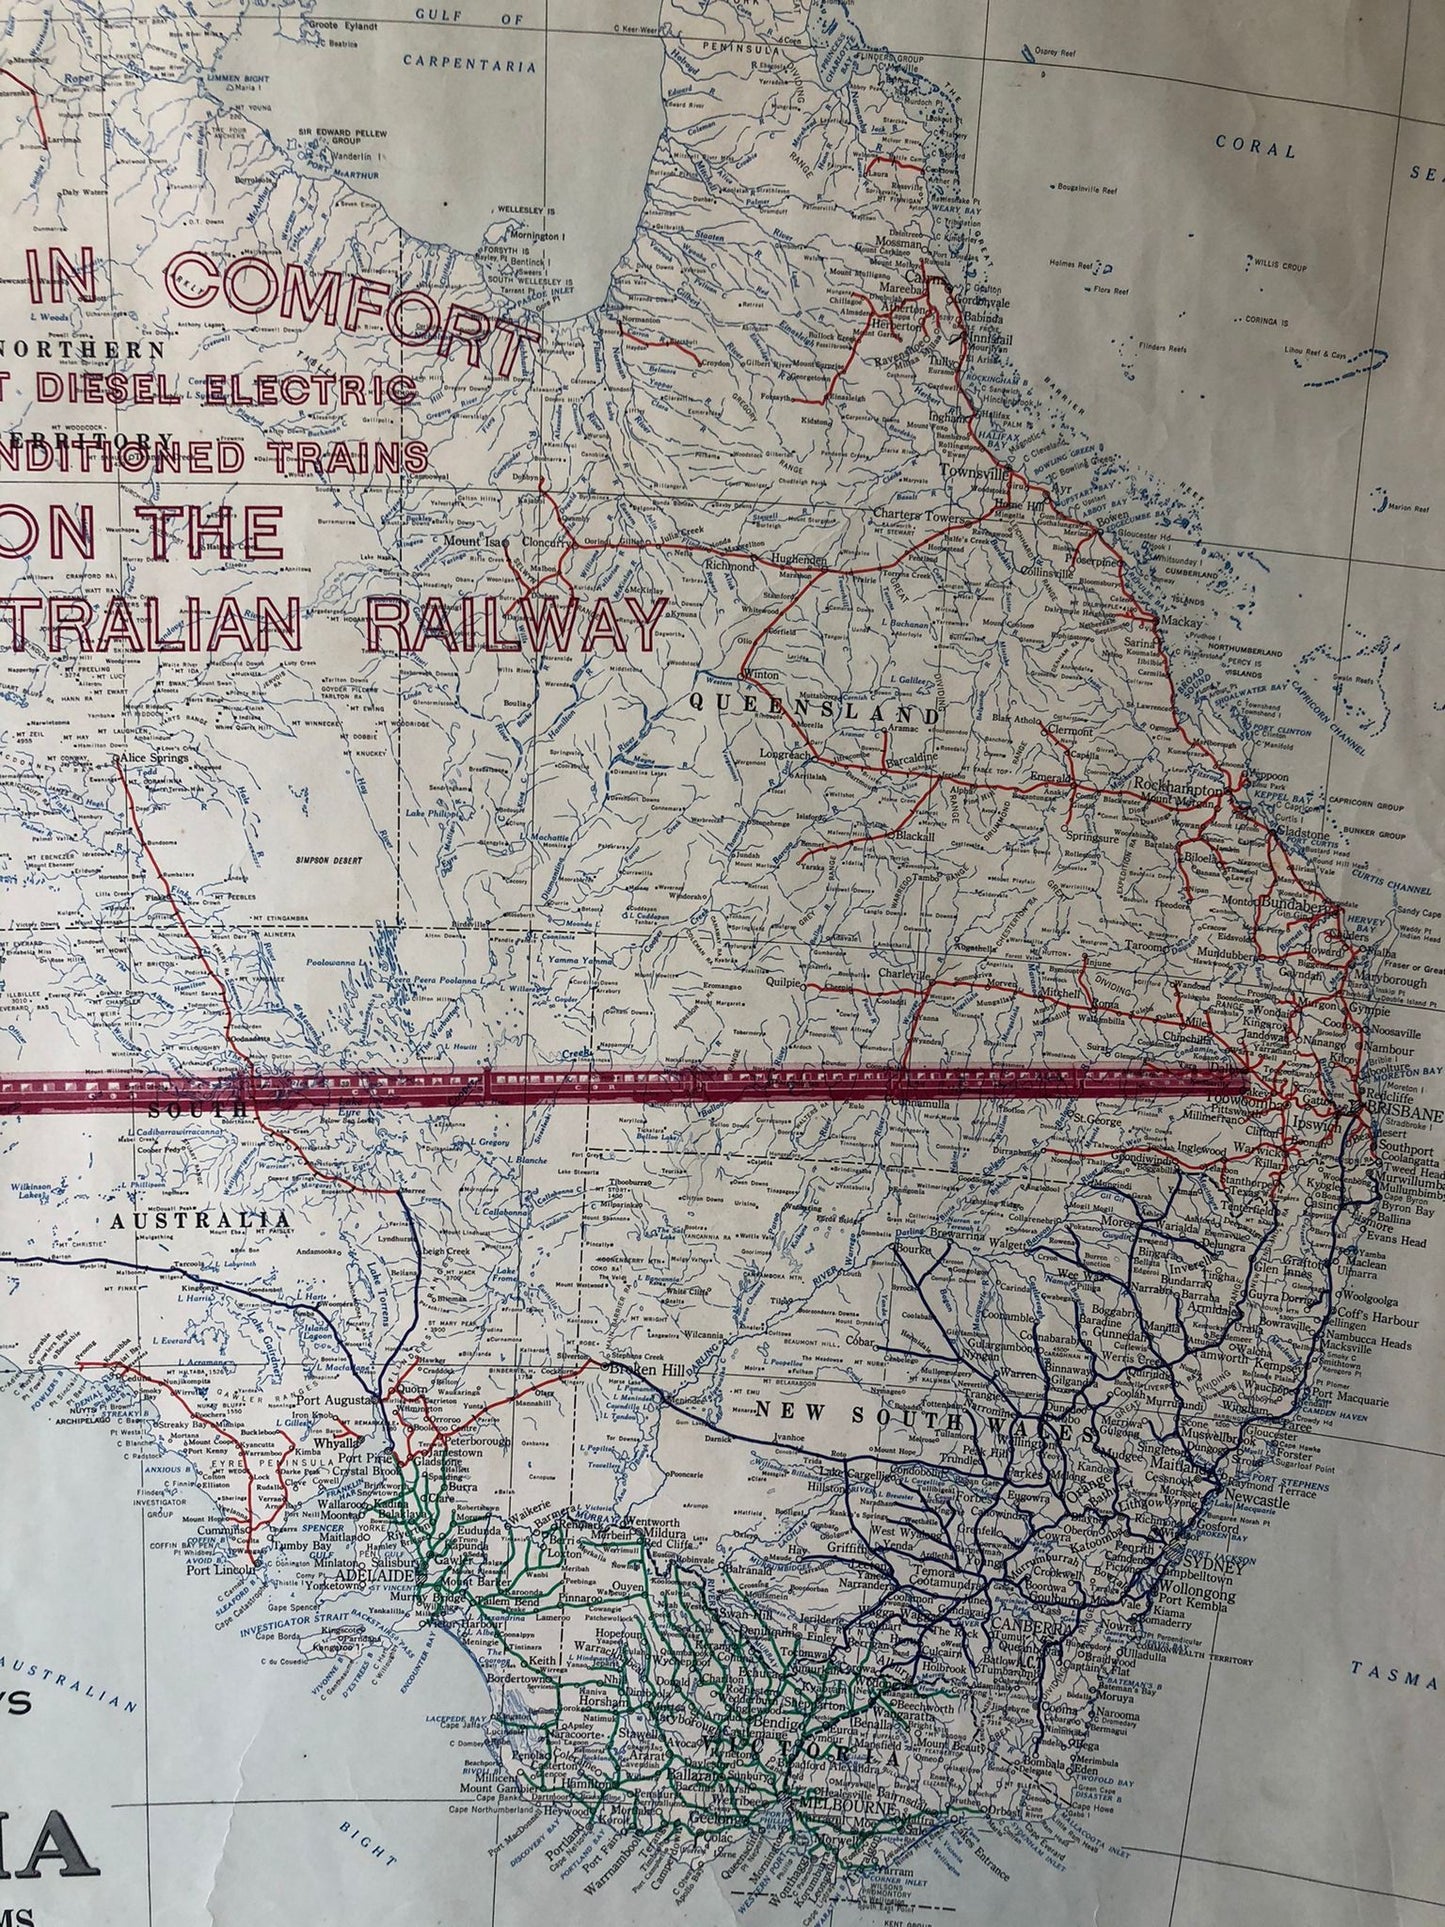 Trans-Australian Railway "Travel In Comfort" Map